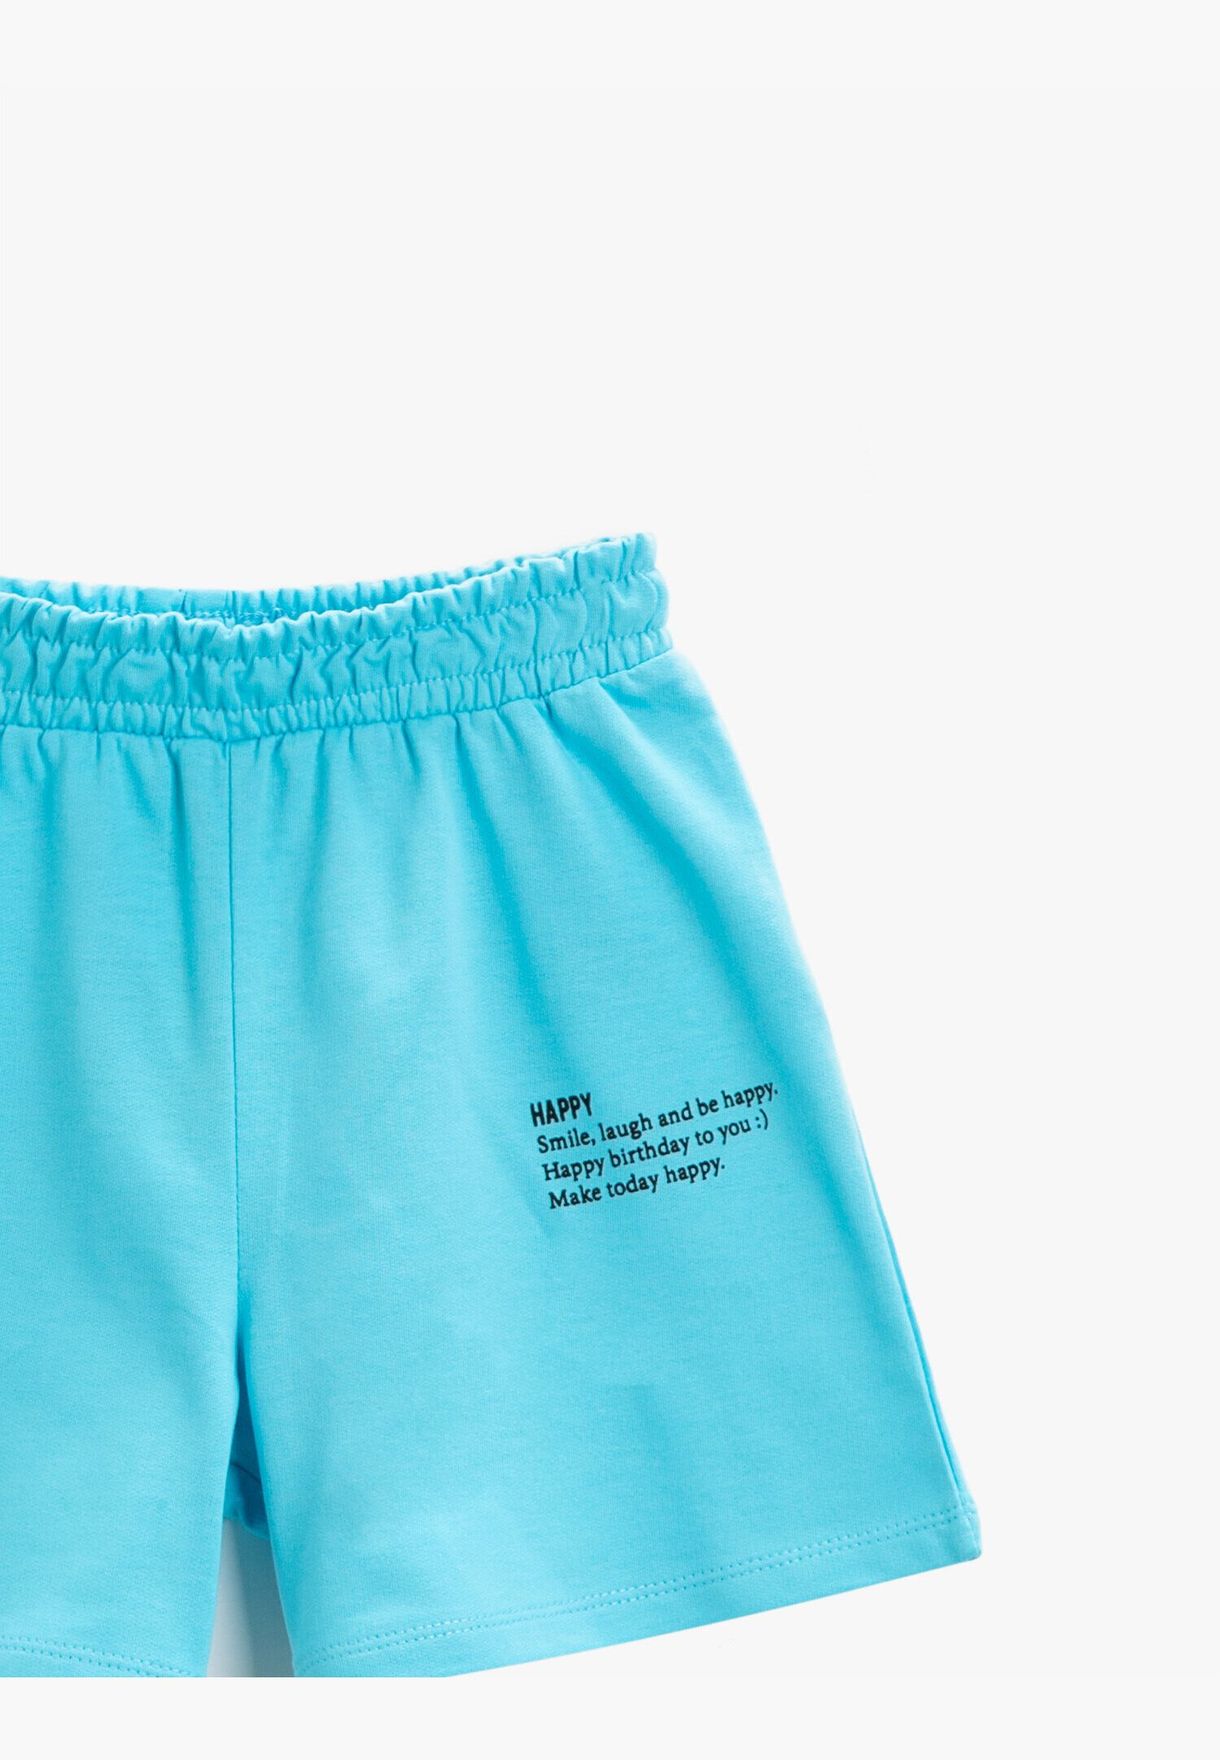 Printed Shorts Cotton